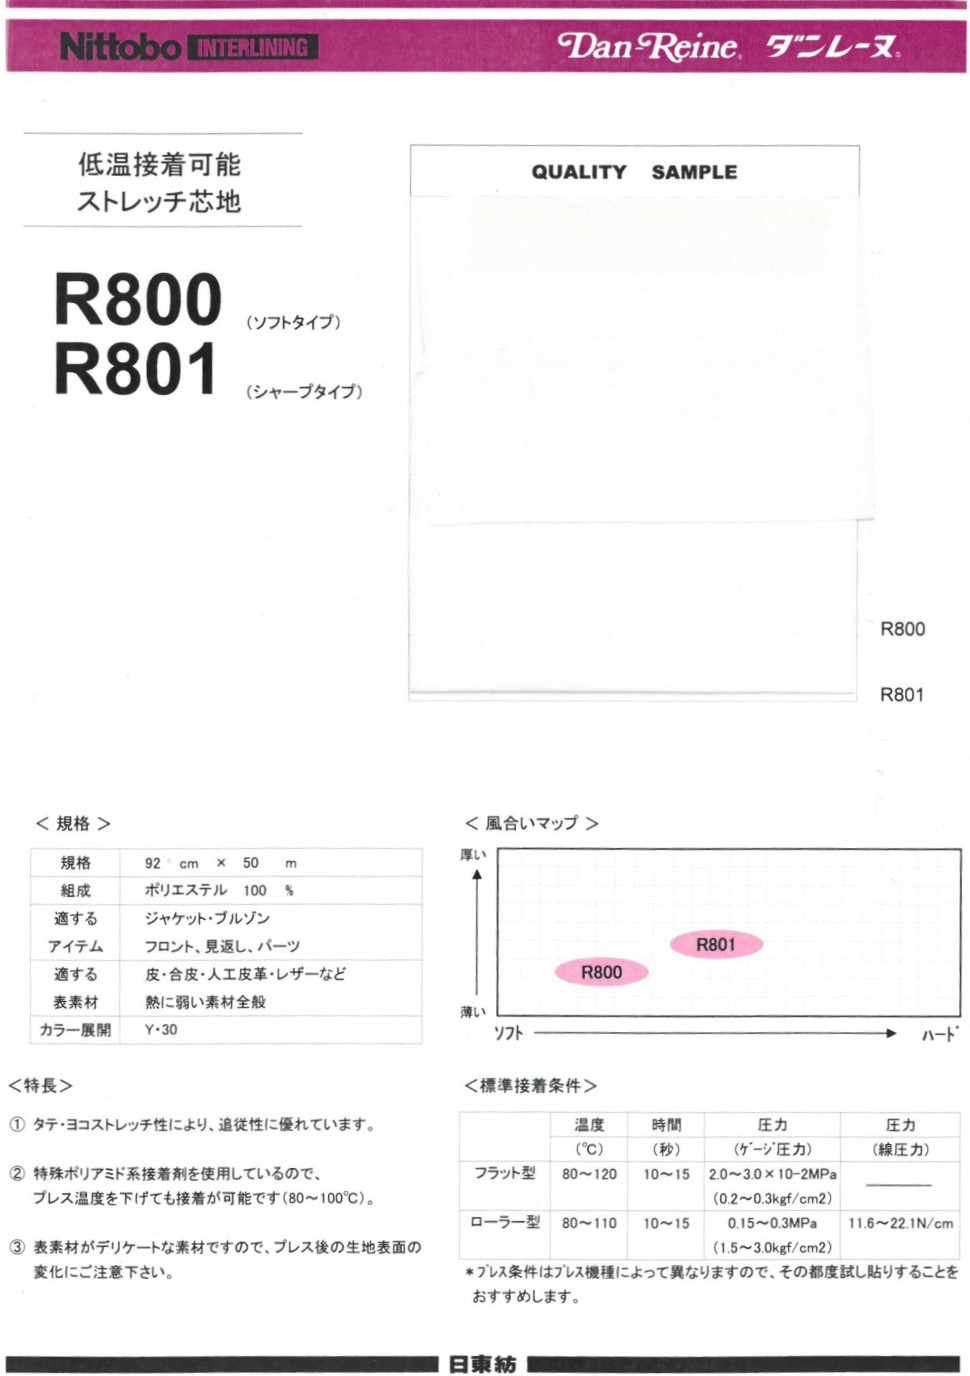 R801 Danlaine Adesivo De Baixa Temperatura Stretch Interlining Sharp Tipo 30D[Entrelinha] Nittobo